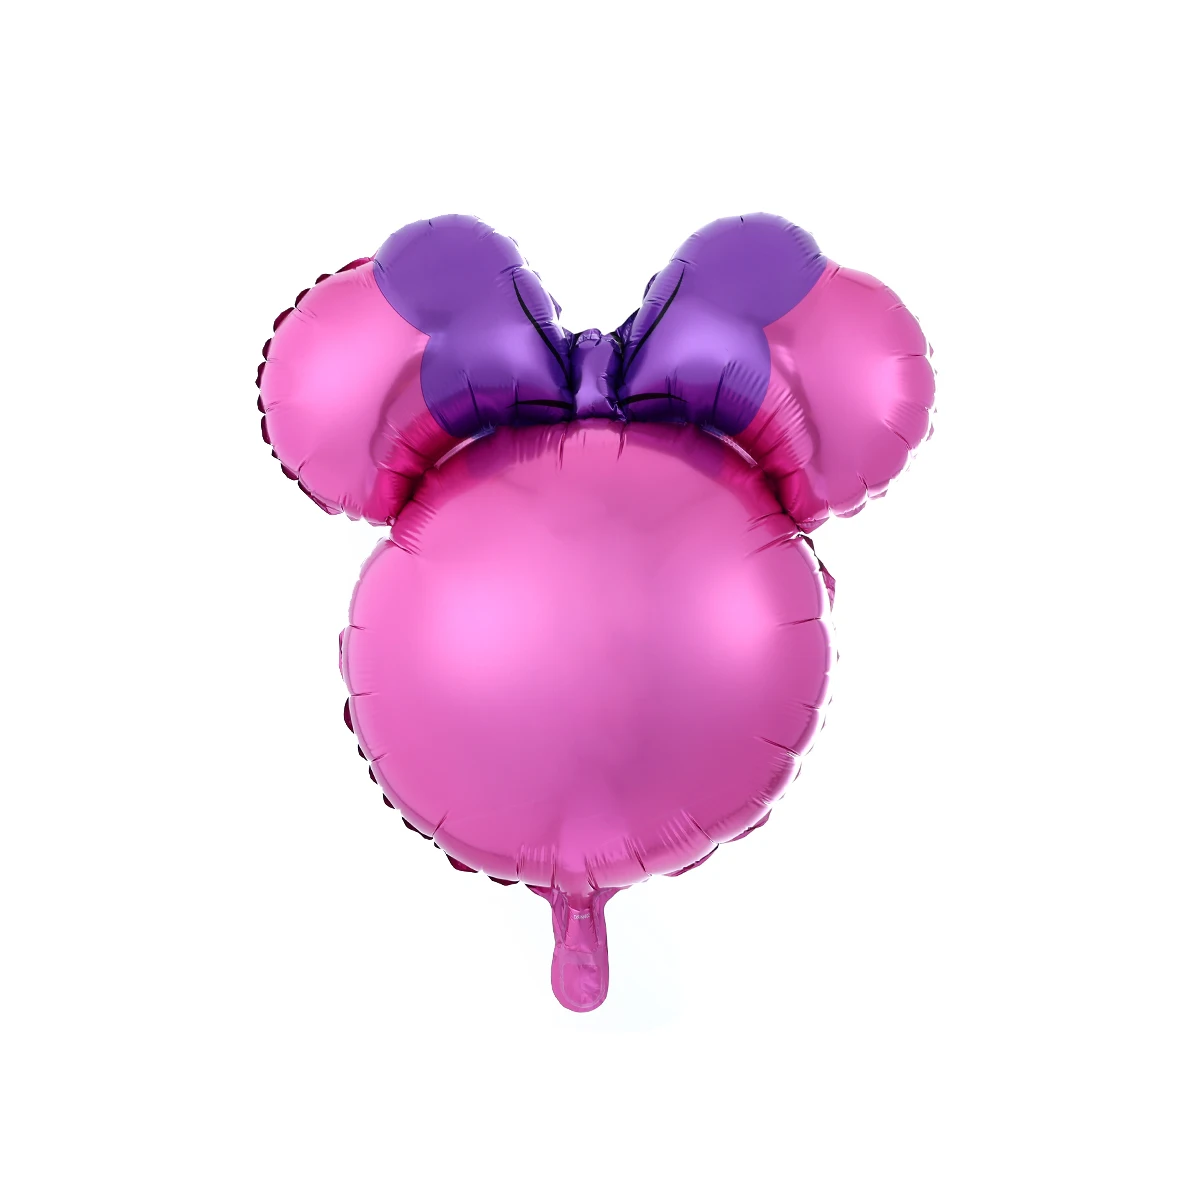 Grand ballon Minnie Mouse XXL hélium neuf pas cher 